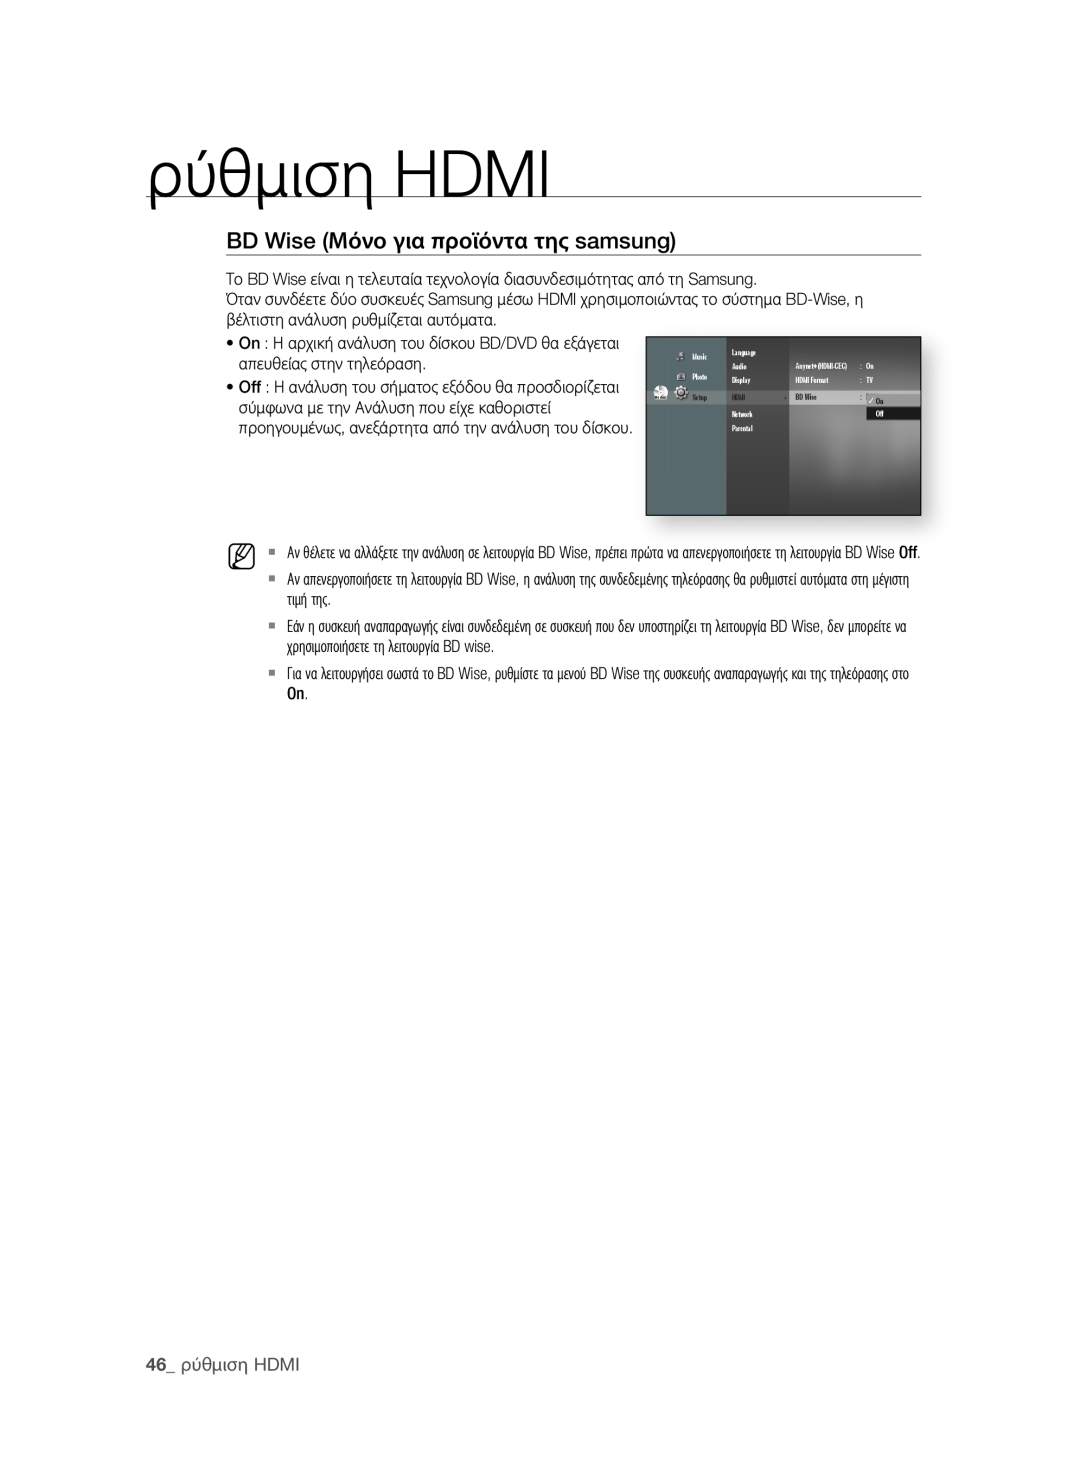 Samsung BD-P1580/EDC manual BD Wise Μόνο για προϊόντα της samsung, απευθείας στην τηλεόραση,  ρύθμιση HDMI 